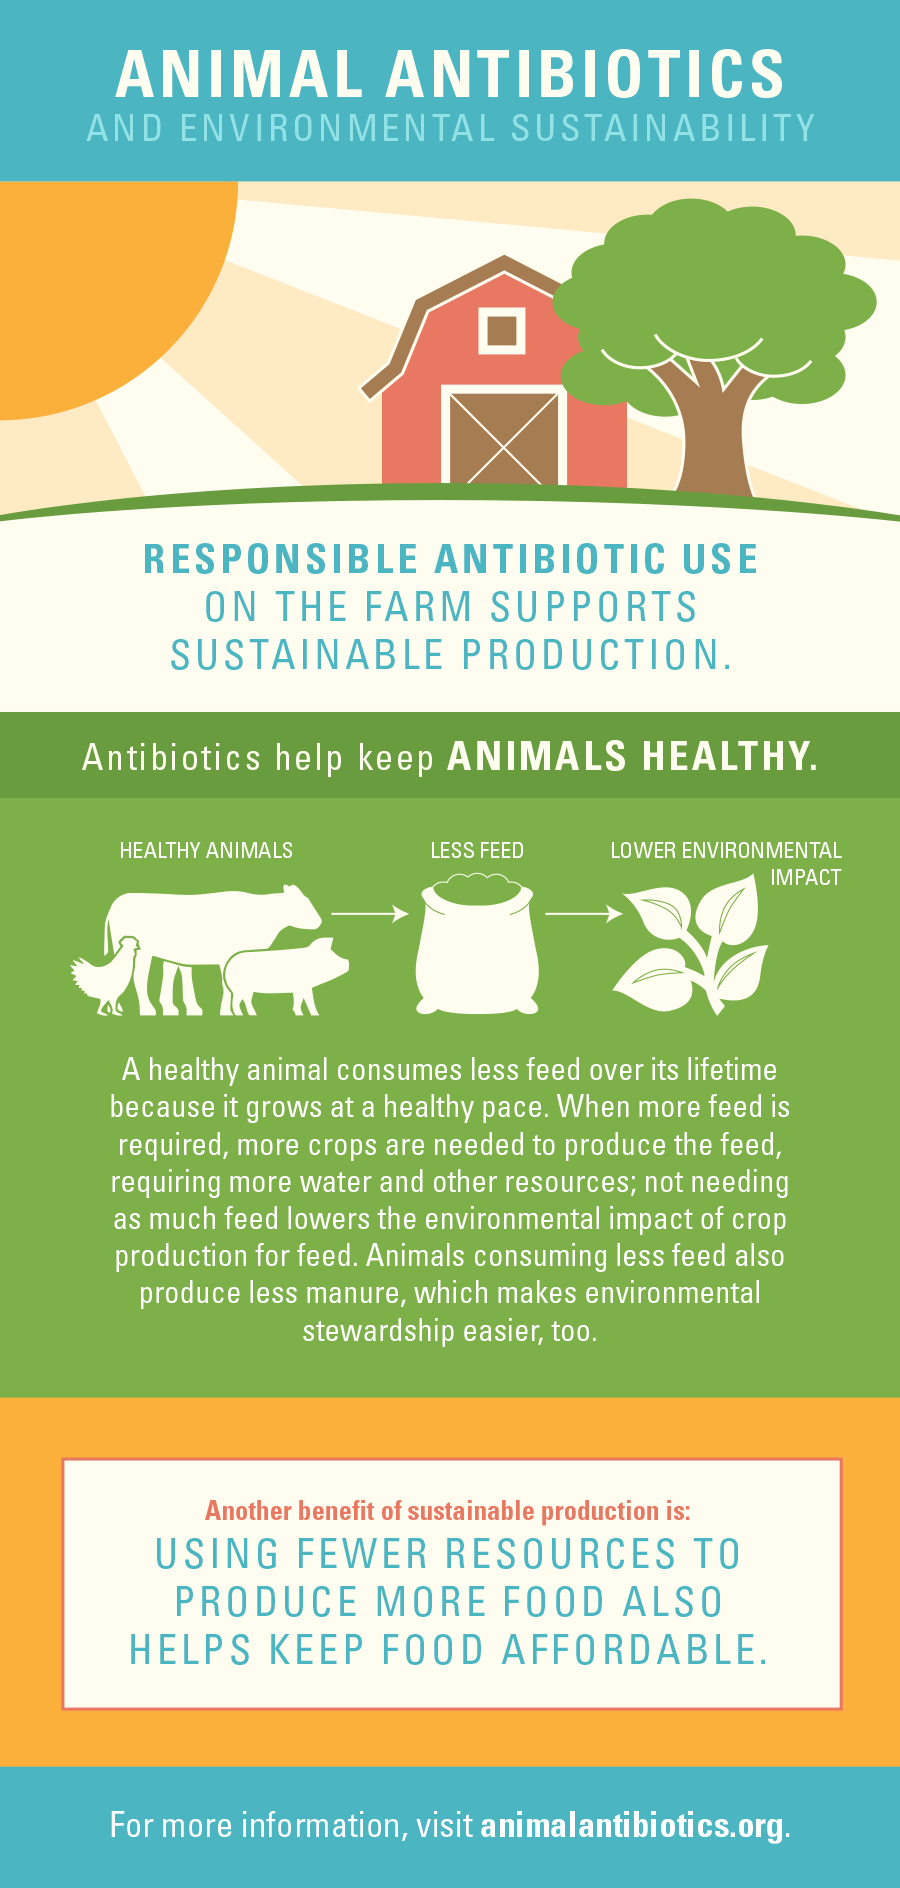 animal-antibiotics-environmental-sustainability